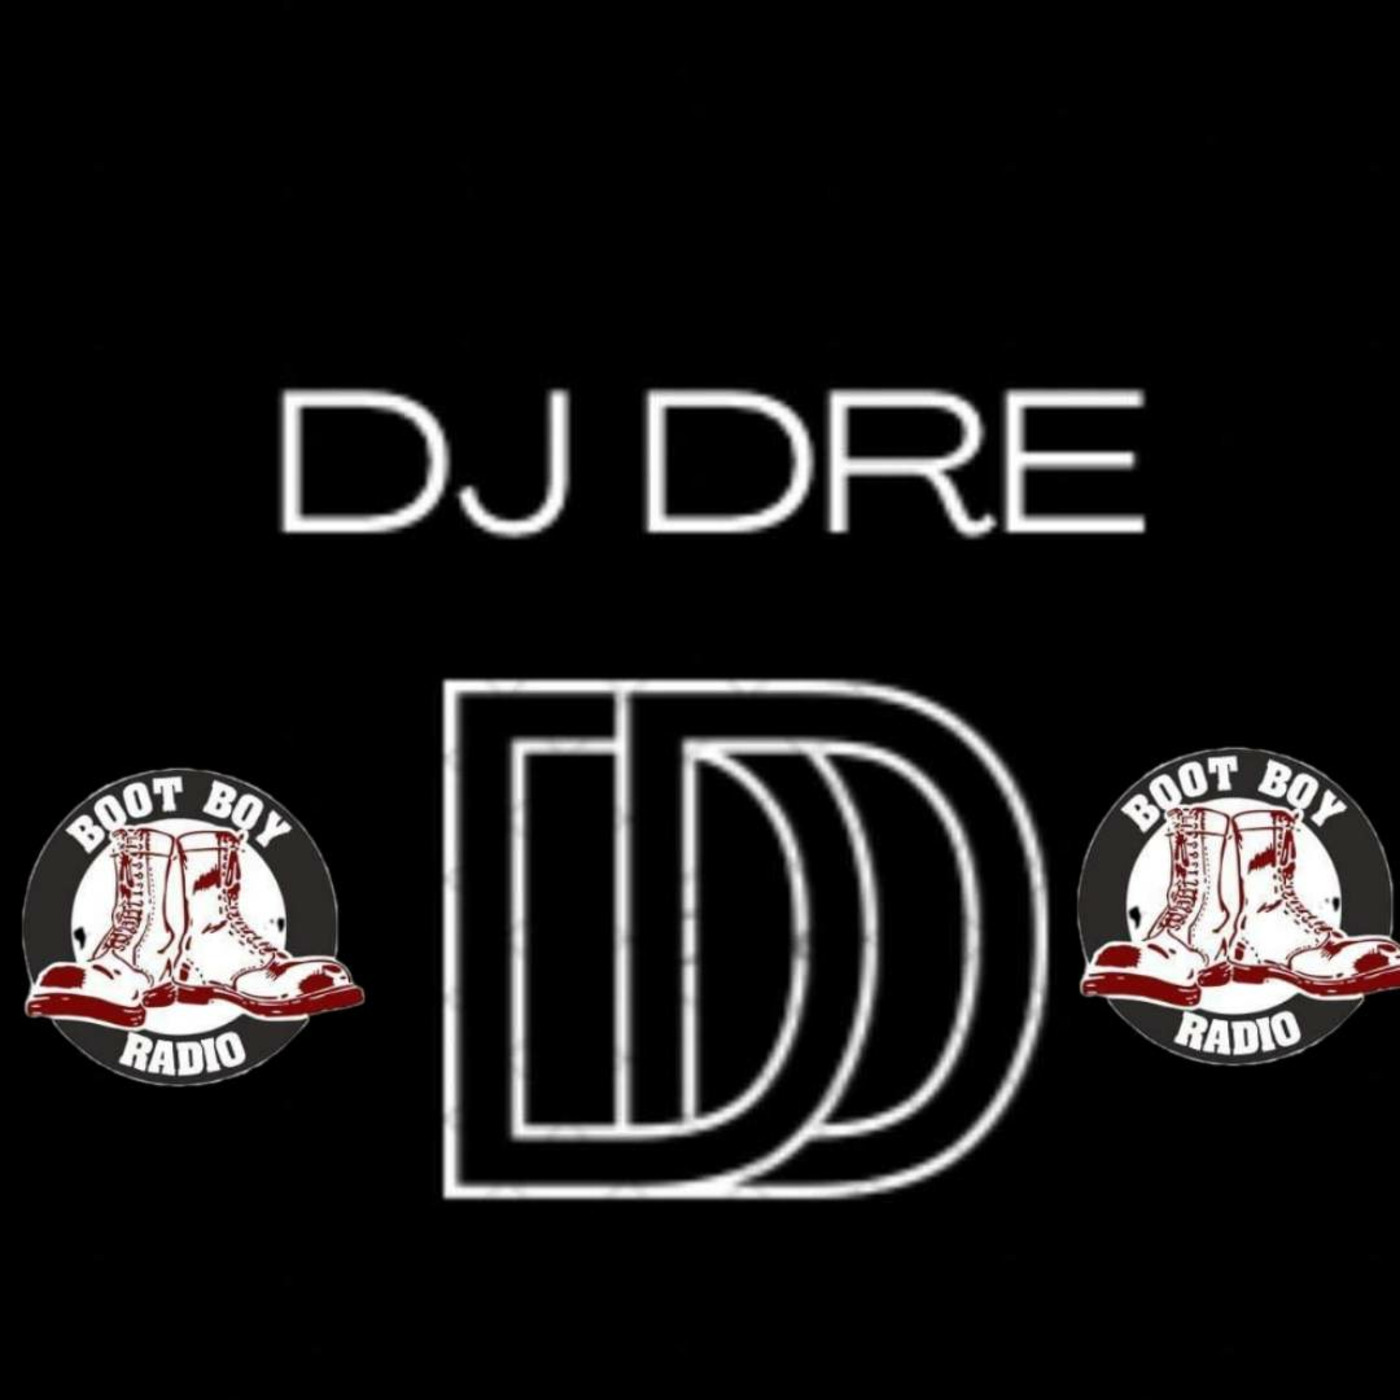 Episode 3057: Dj Dre Show 8 23rd Jan 2023 On www.bootboyradio.net